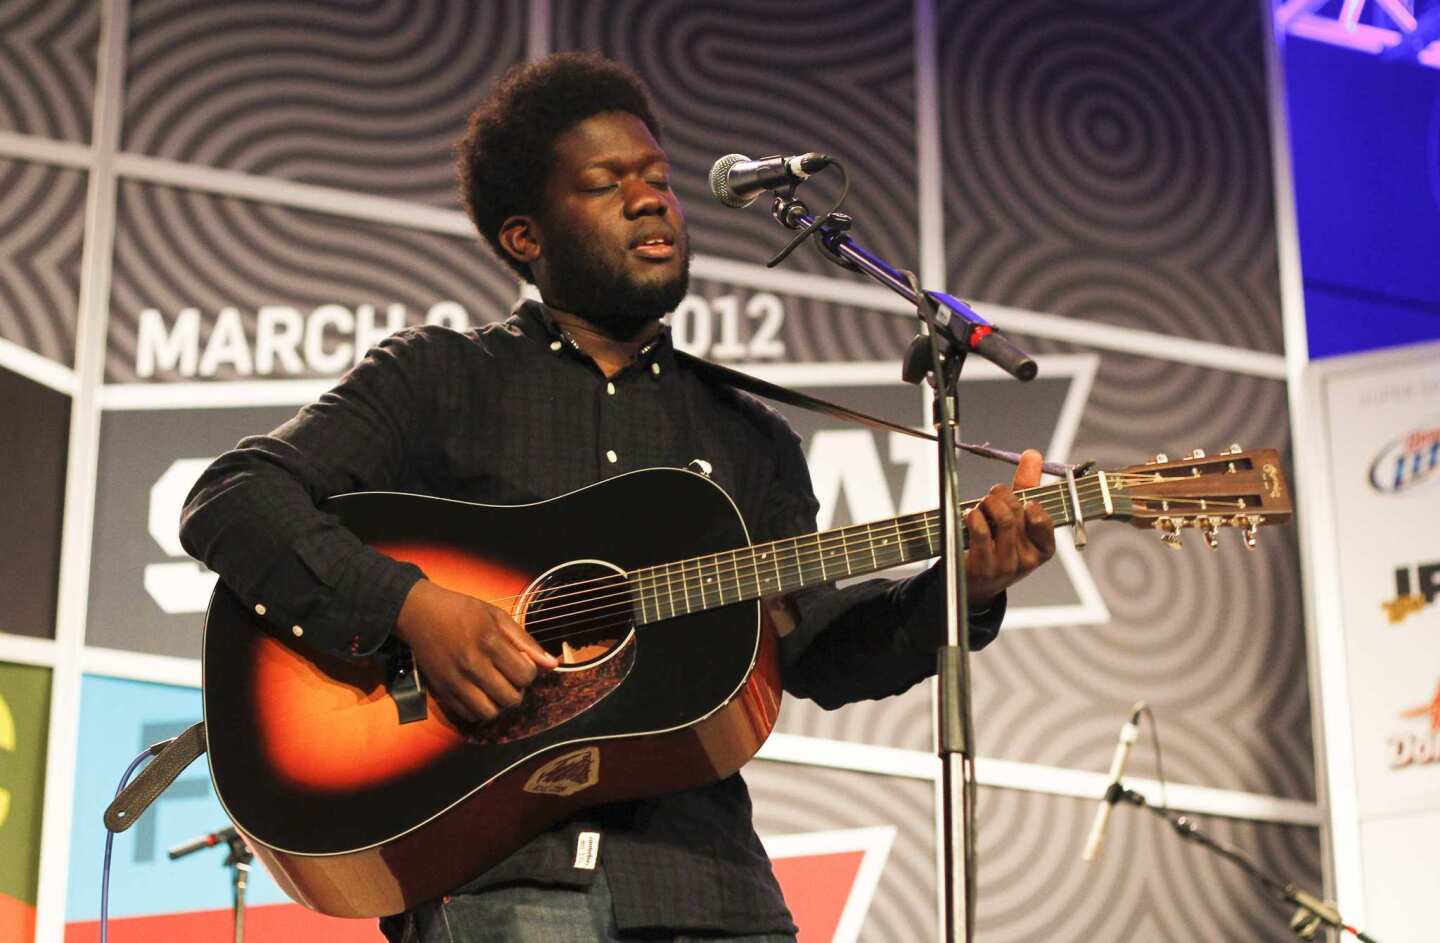 British soul singer Michael Kiwanuka performs at the SXSW Music Festival in Austin, Texas